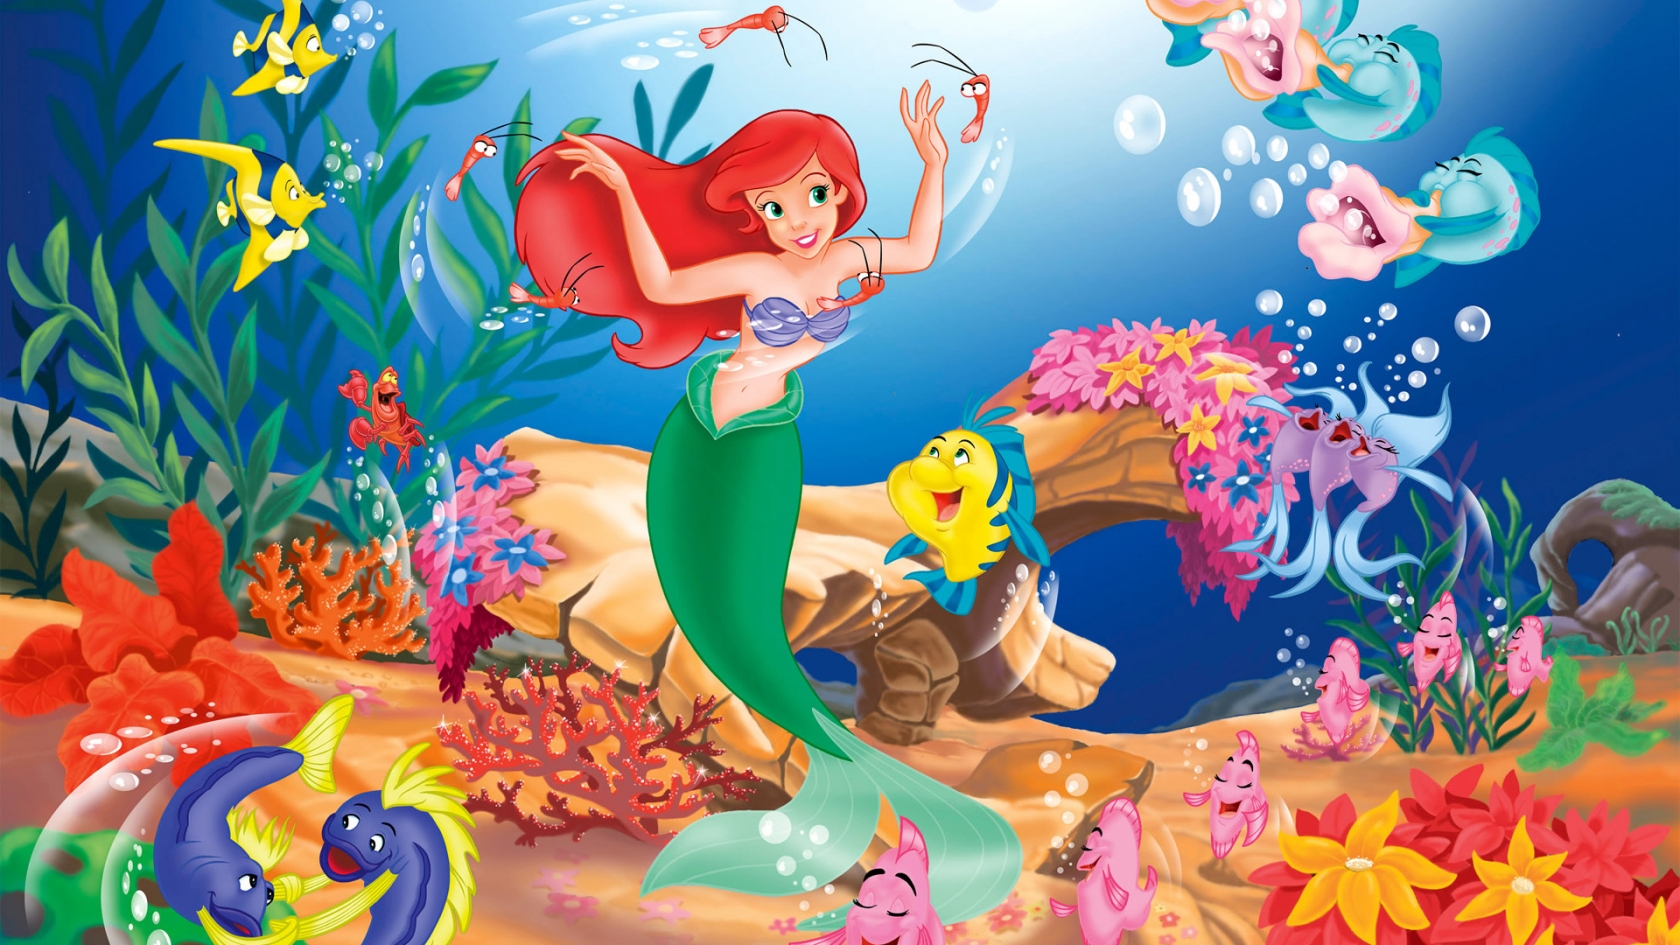 Little Mermaid Cartoon for 1680 x 945 HDTV resolution